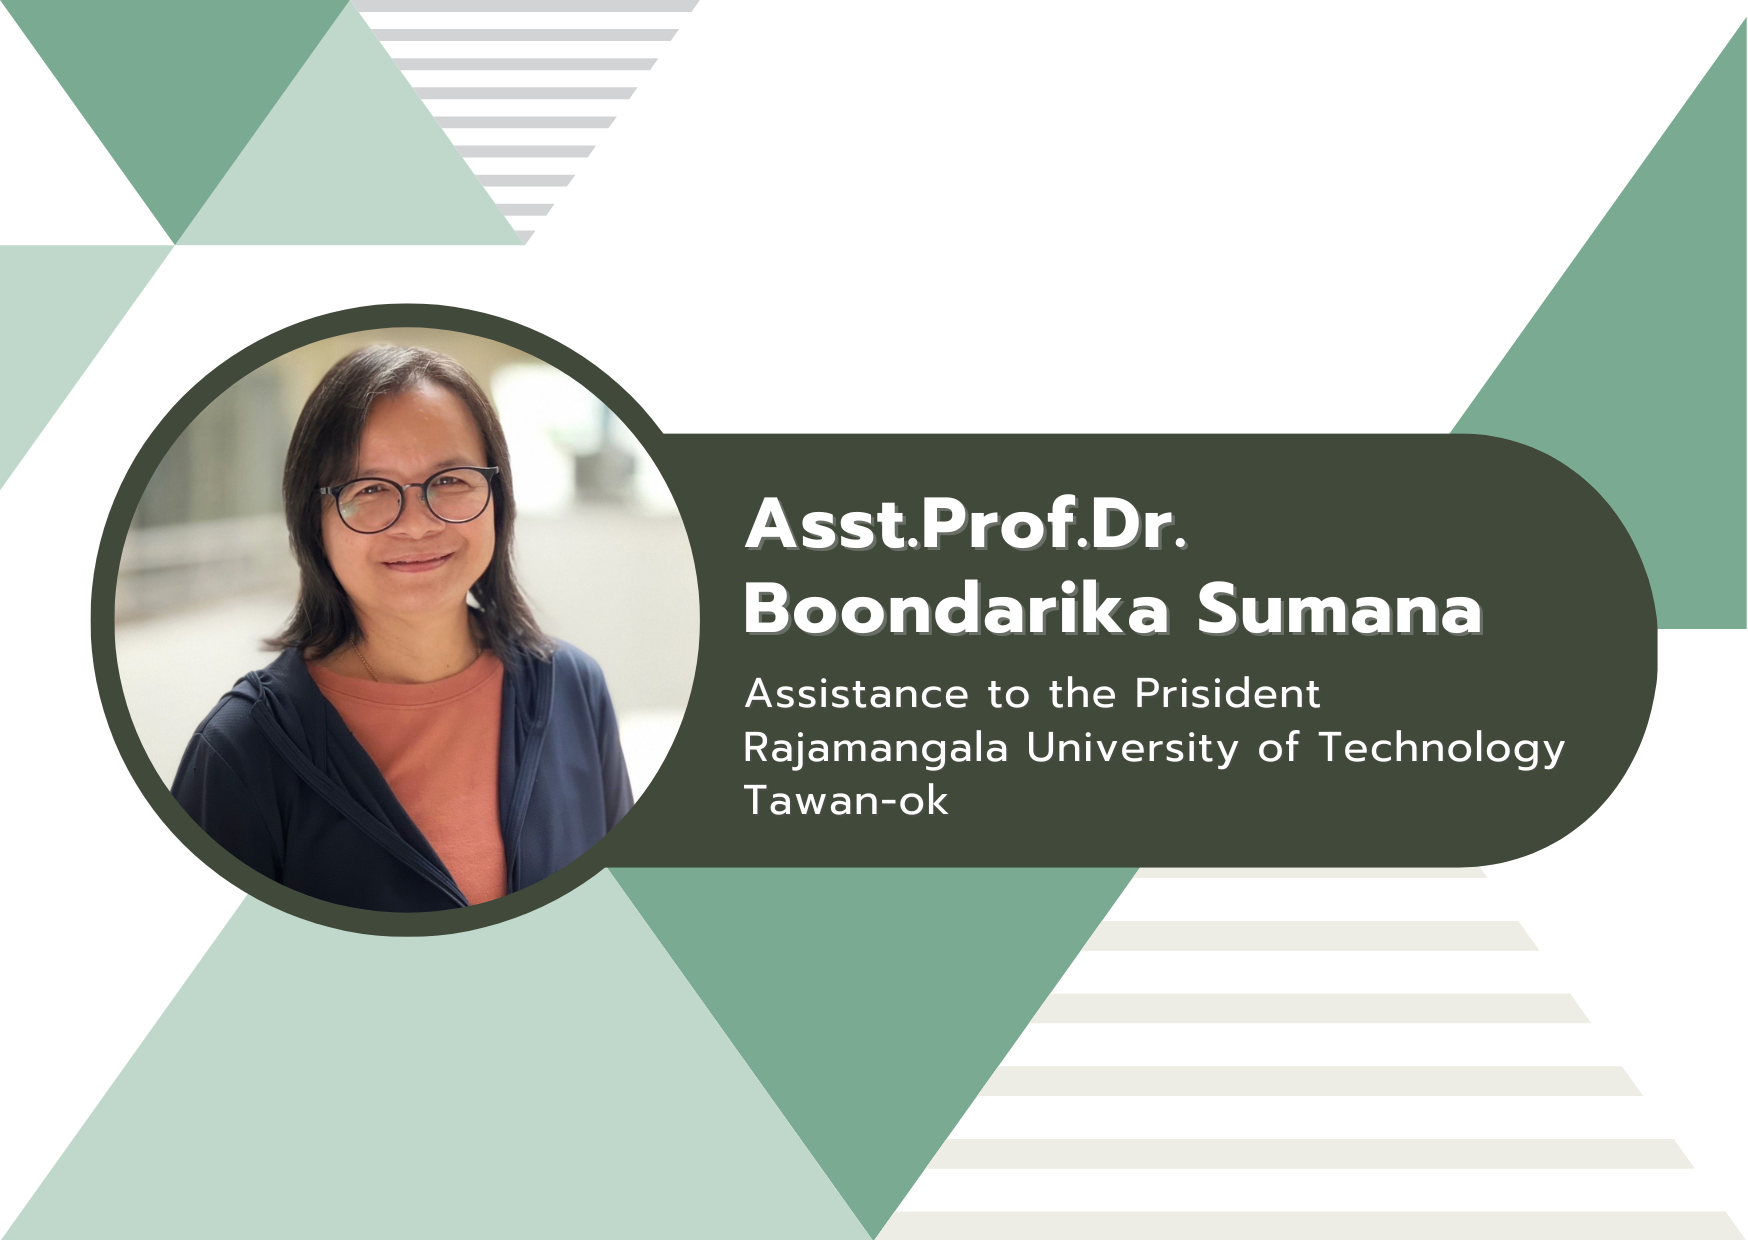 Asst.Prof.Dr. Boondarika Sumana